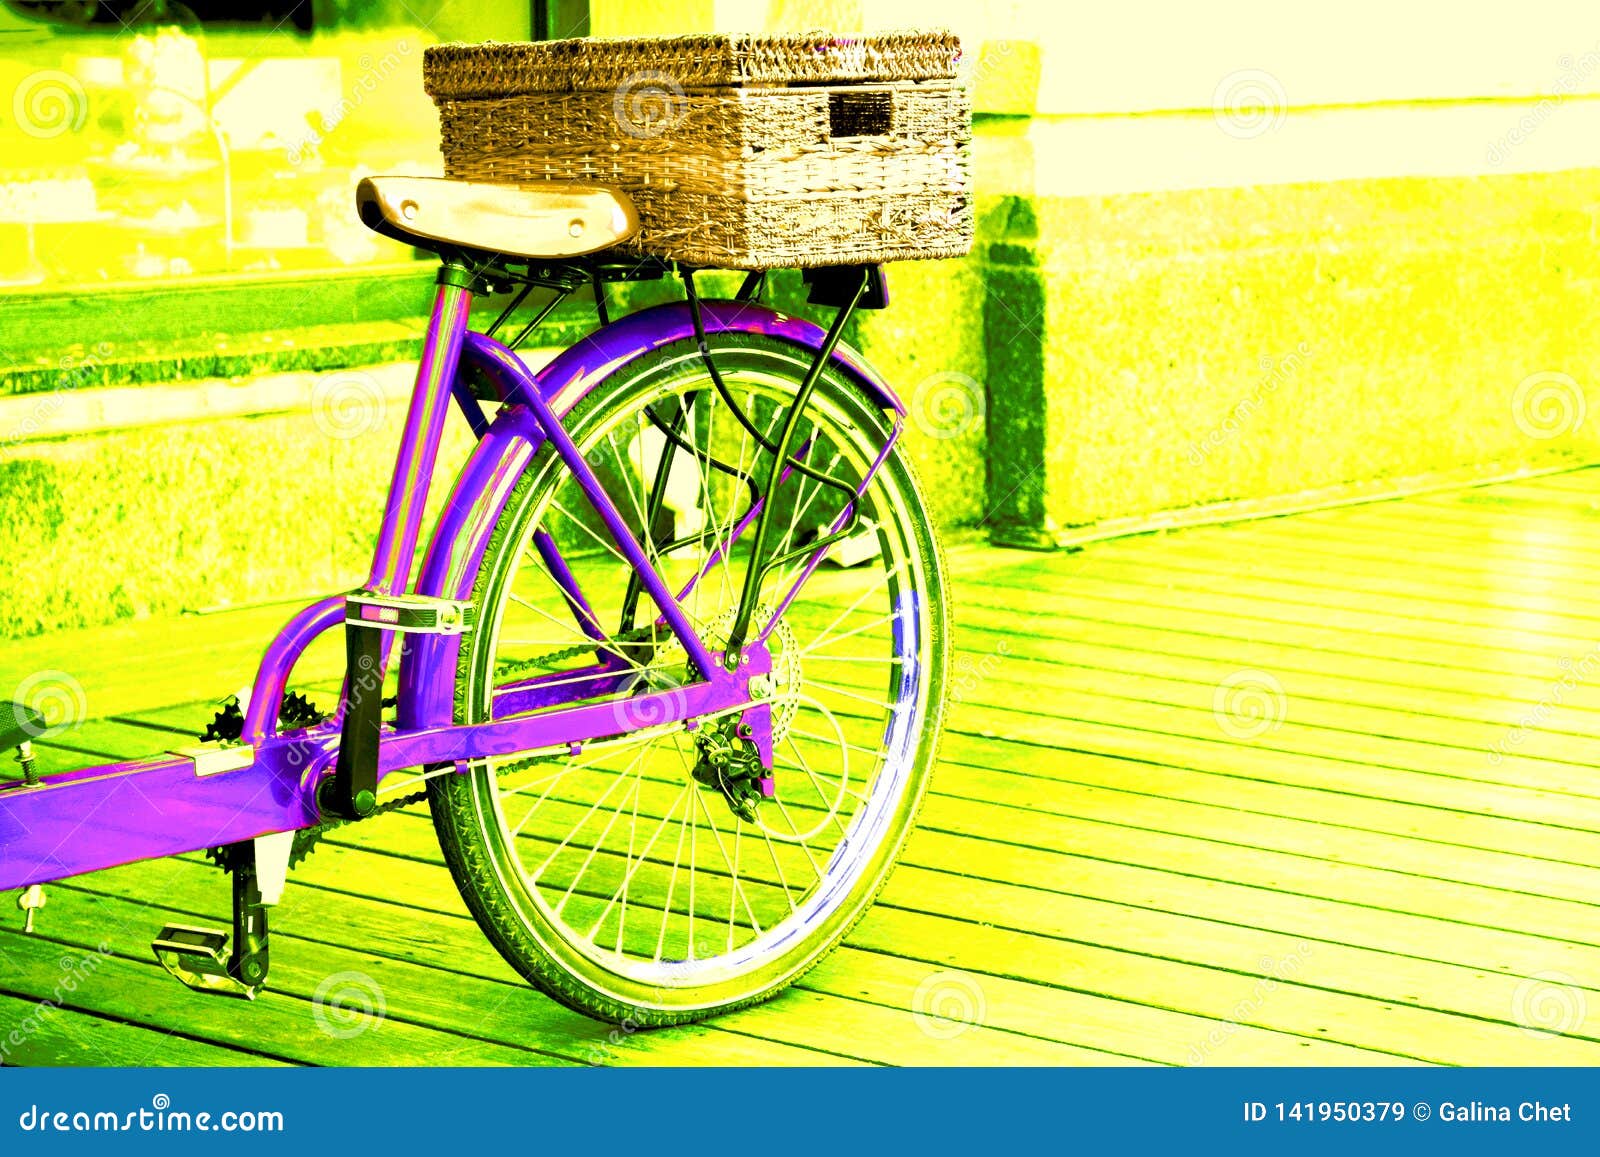 purple bike basket